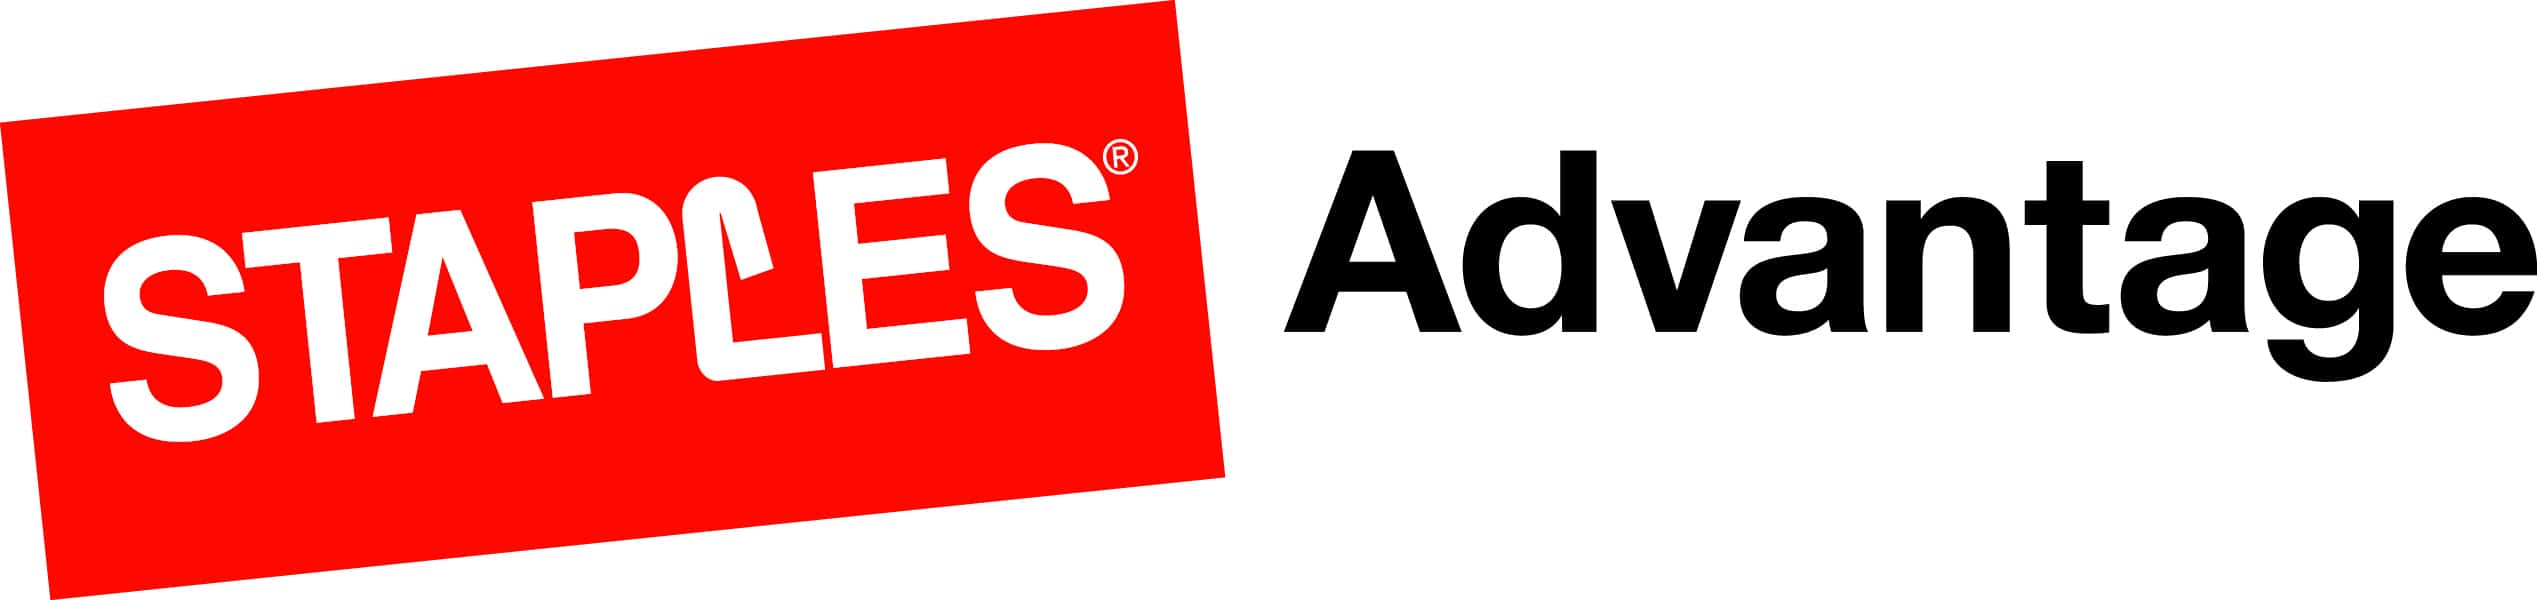 Advantage Logo - Staples Advantage logo | Digital Commerce 360